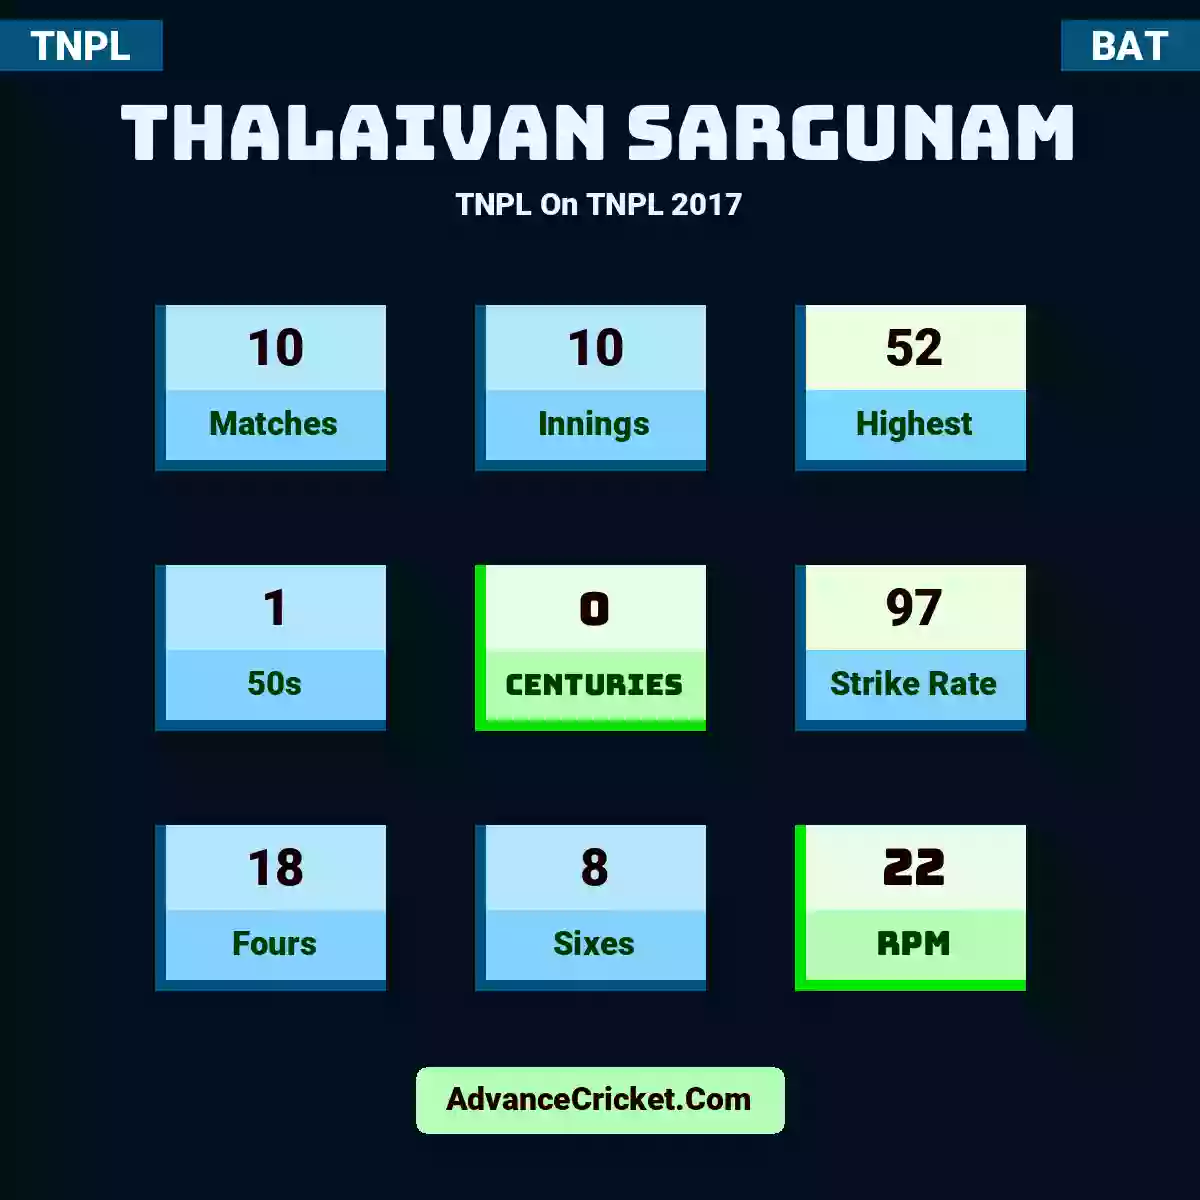 Thalaivan Sargunam TNPL  On TNPL 2017, Thalaivan Sargunam played 10 matches, scored 52 runs as highest, 1 half-centuries, and 0 centuries, with a strike rate of 97. T.Sargunam hit 18 fours and 8 sixes, with an RPM of 22.